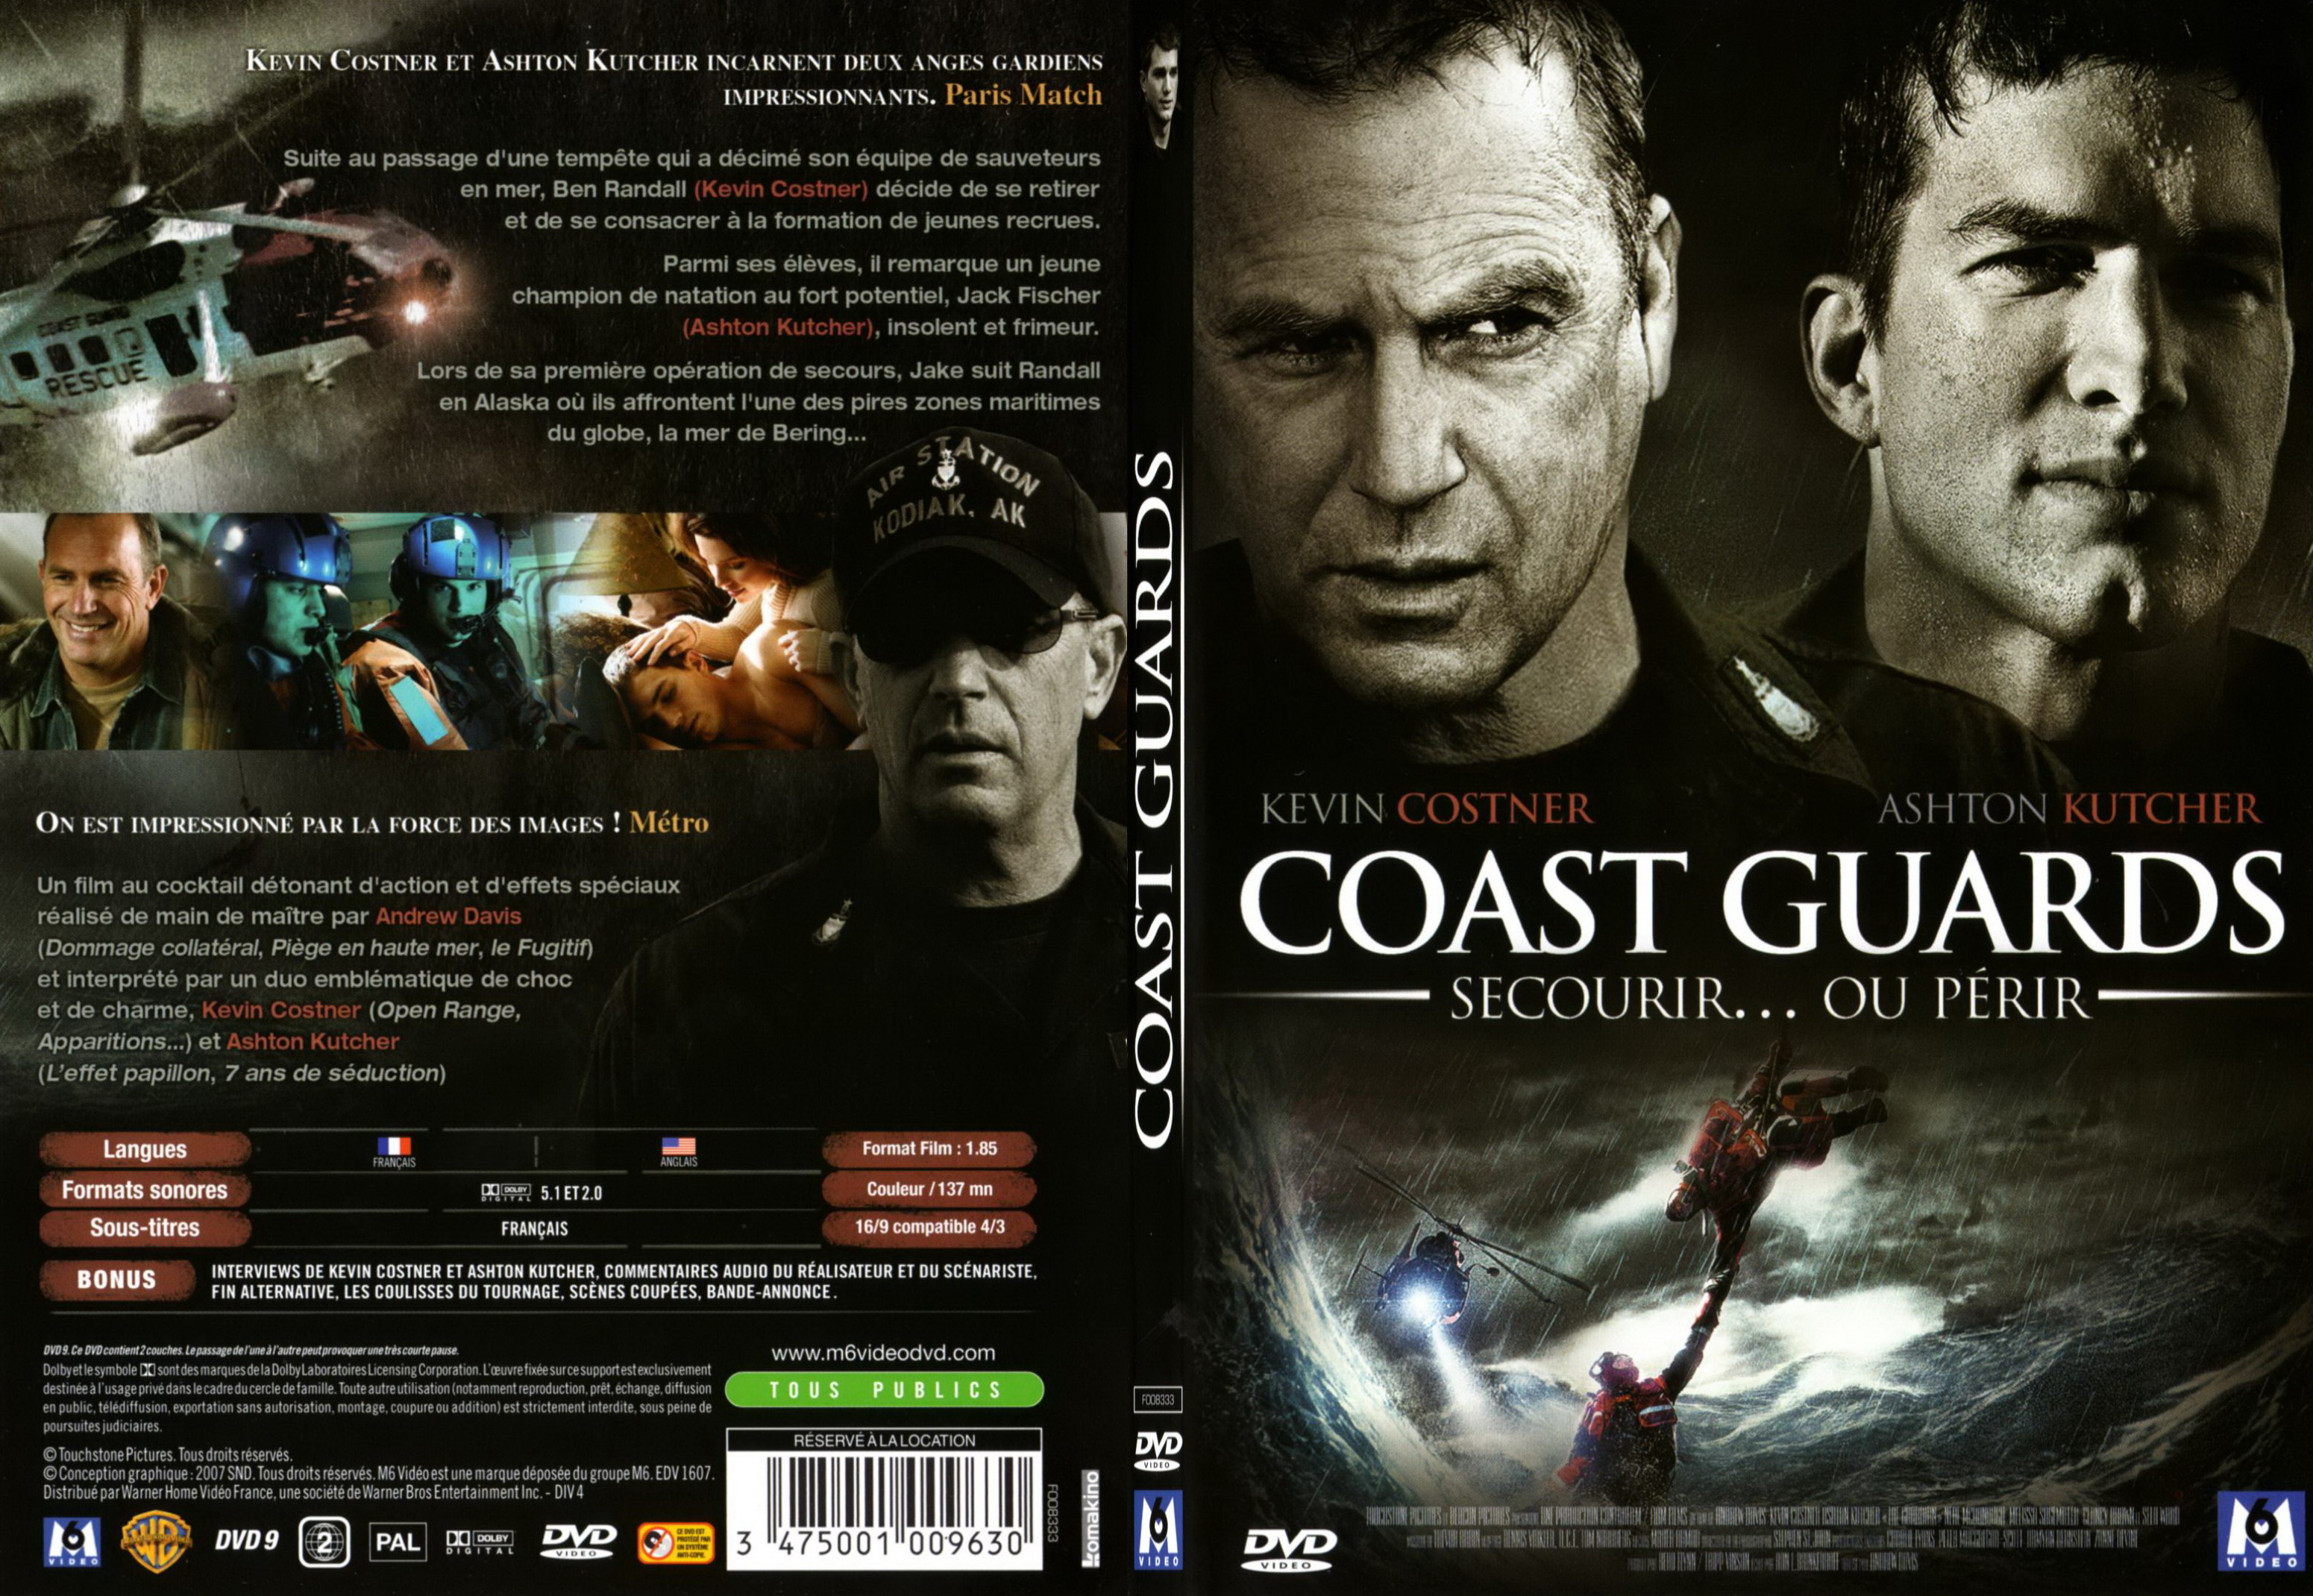 Jaquette DVD Coast guard - SLIM